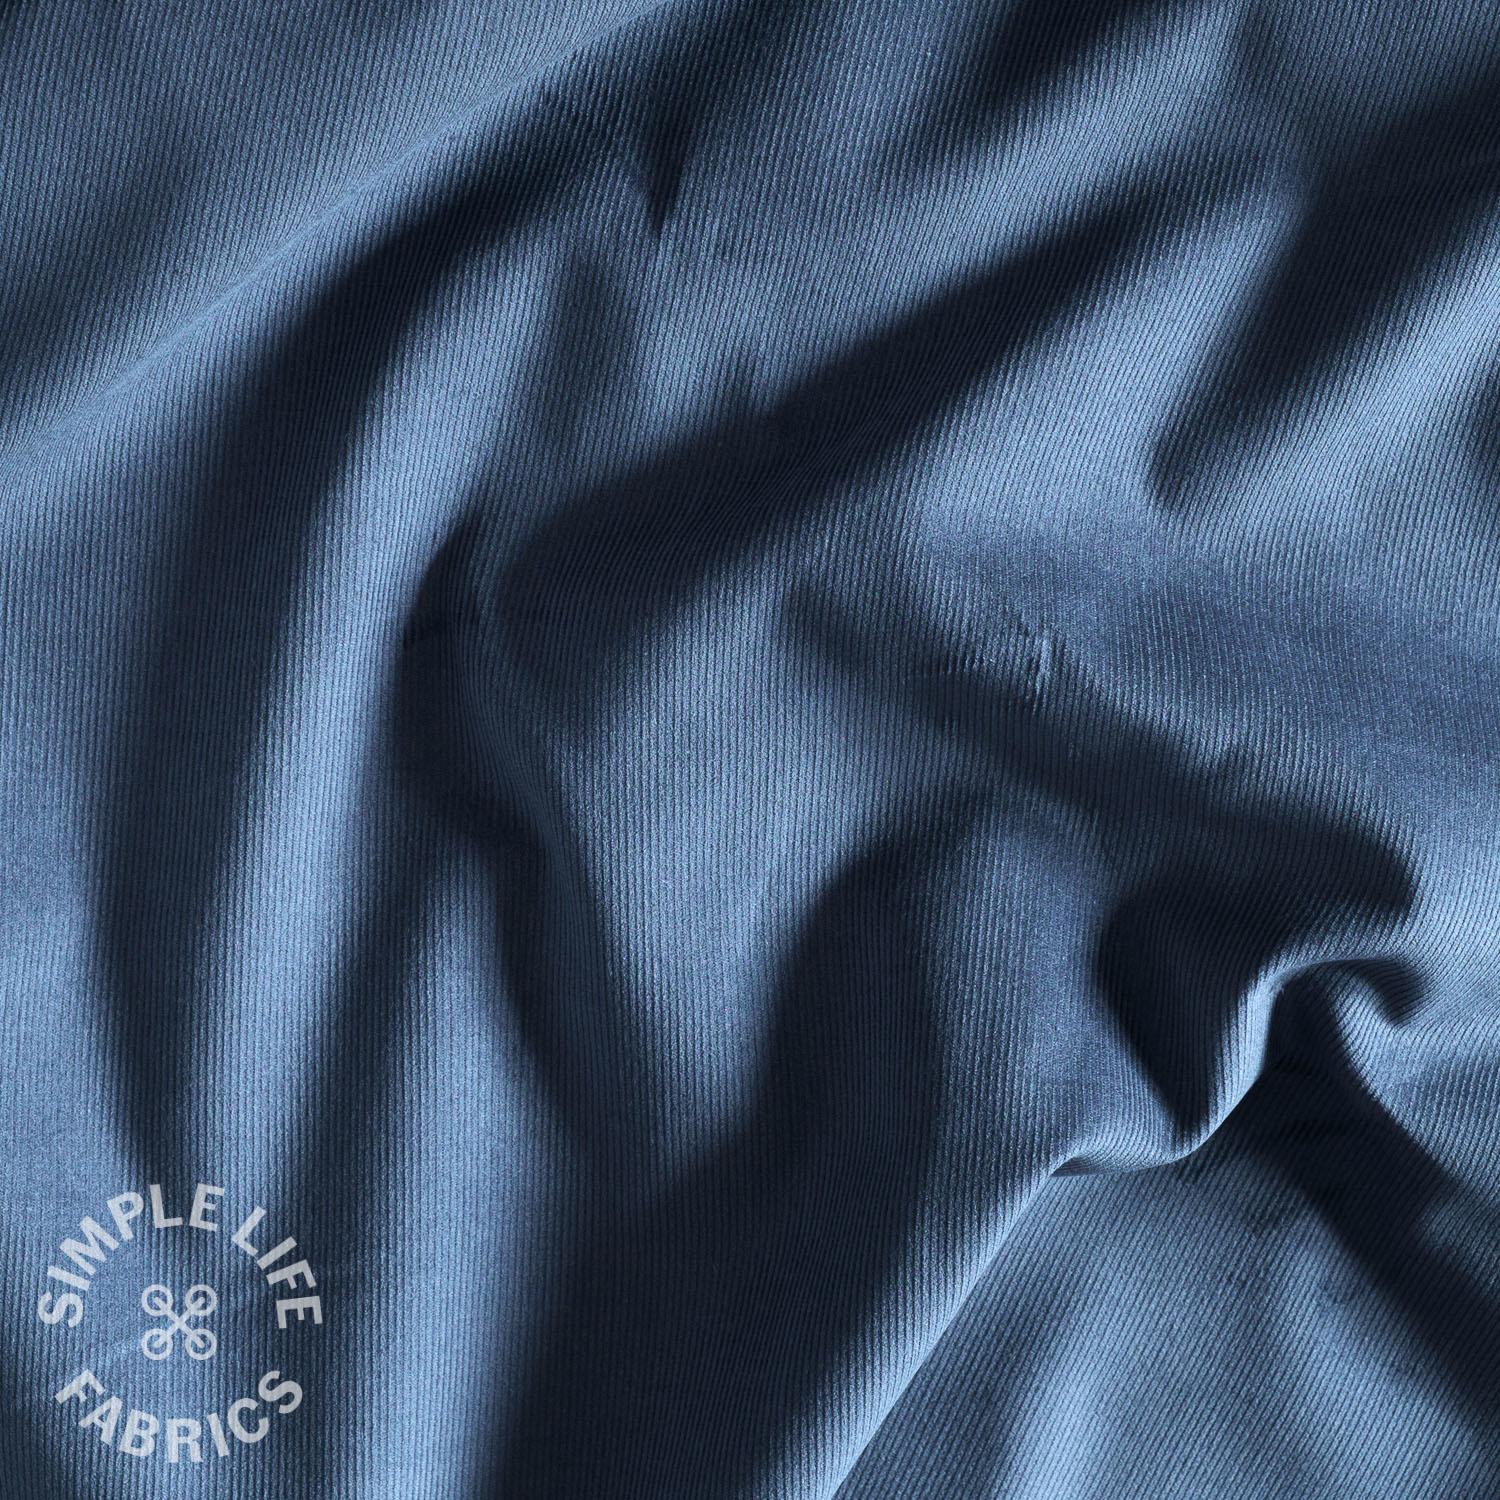 Jeans blue babycord needlecord plain fabric